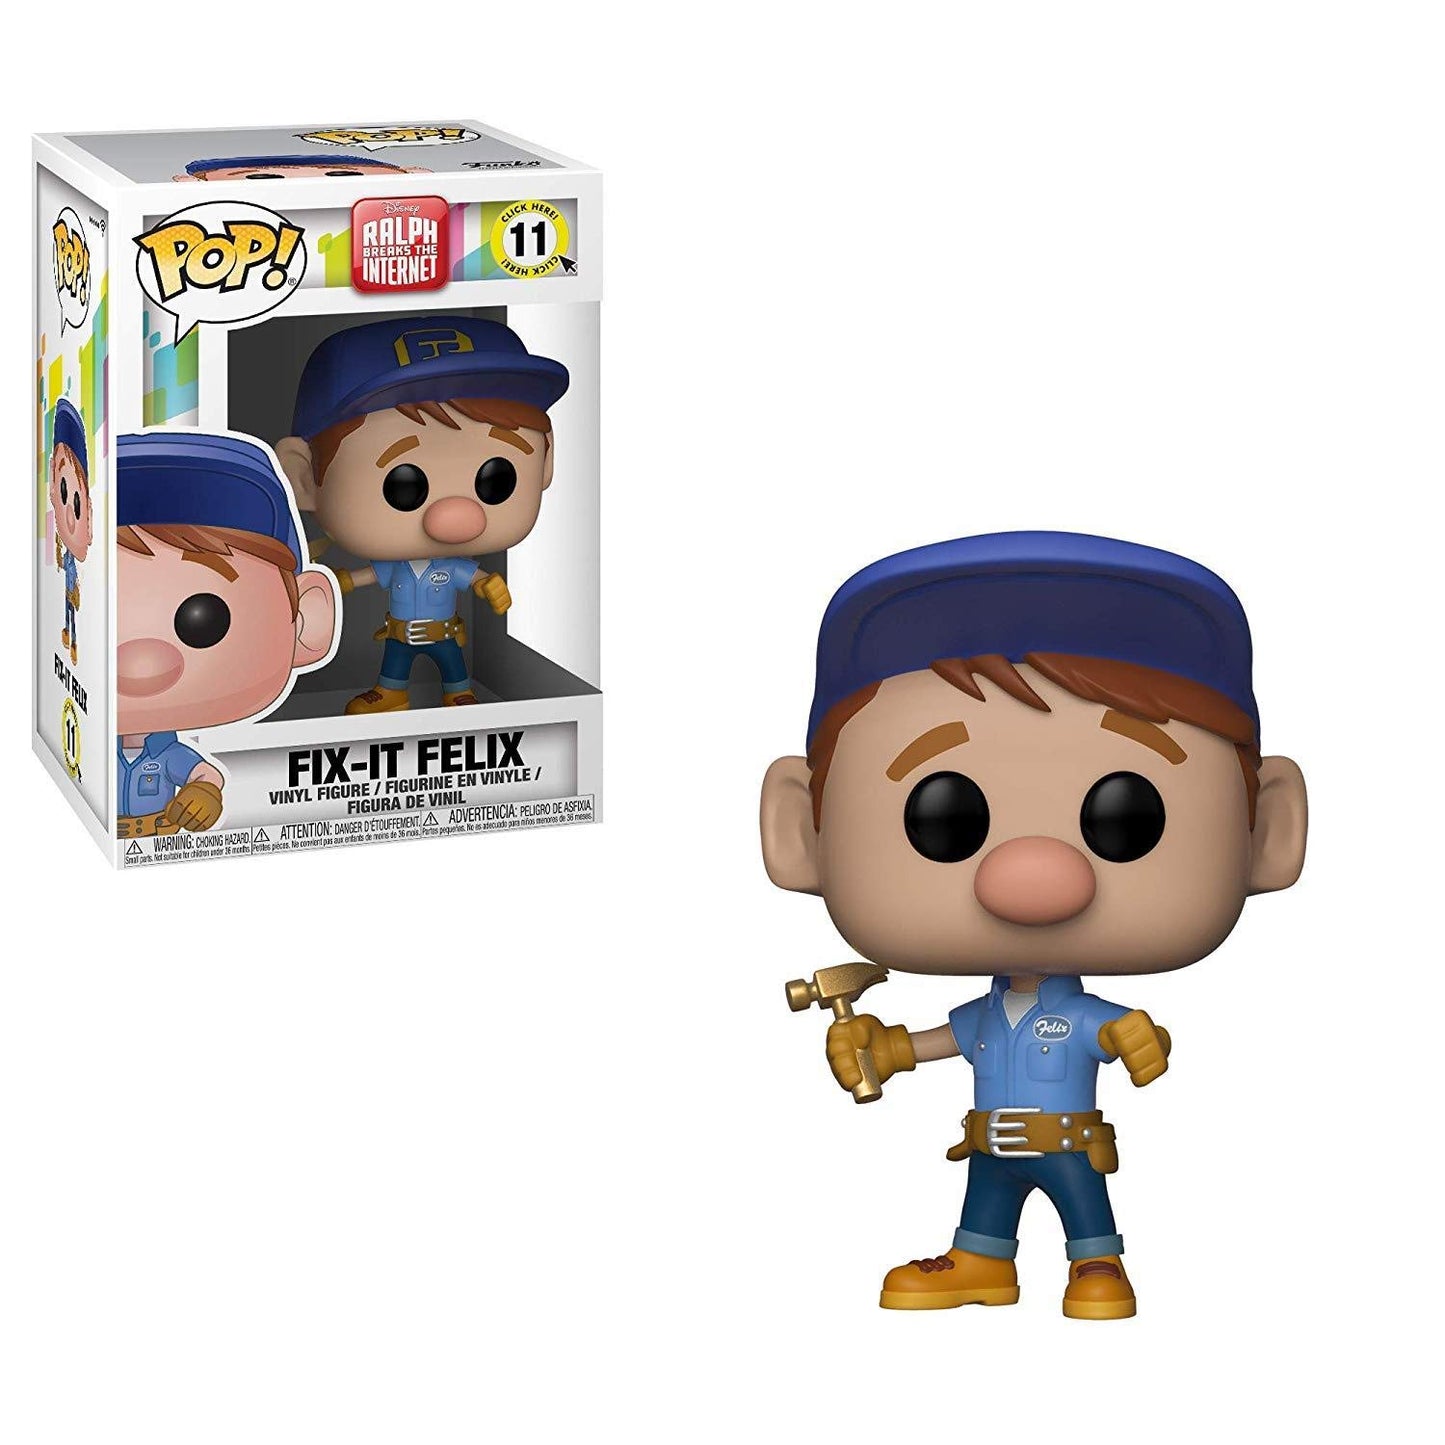 Funko POP! Disney: Wreck-It Ralph 2 -Fix-It Felix